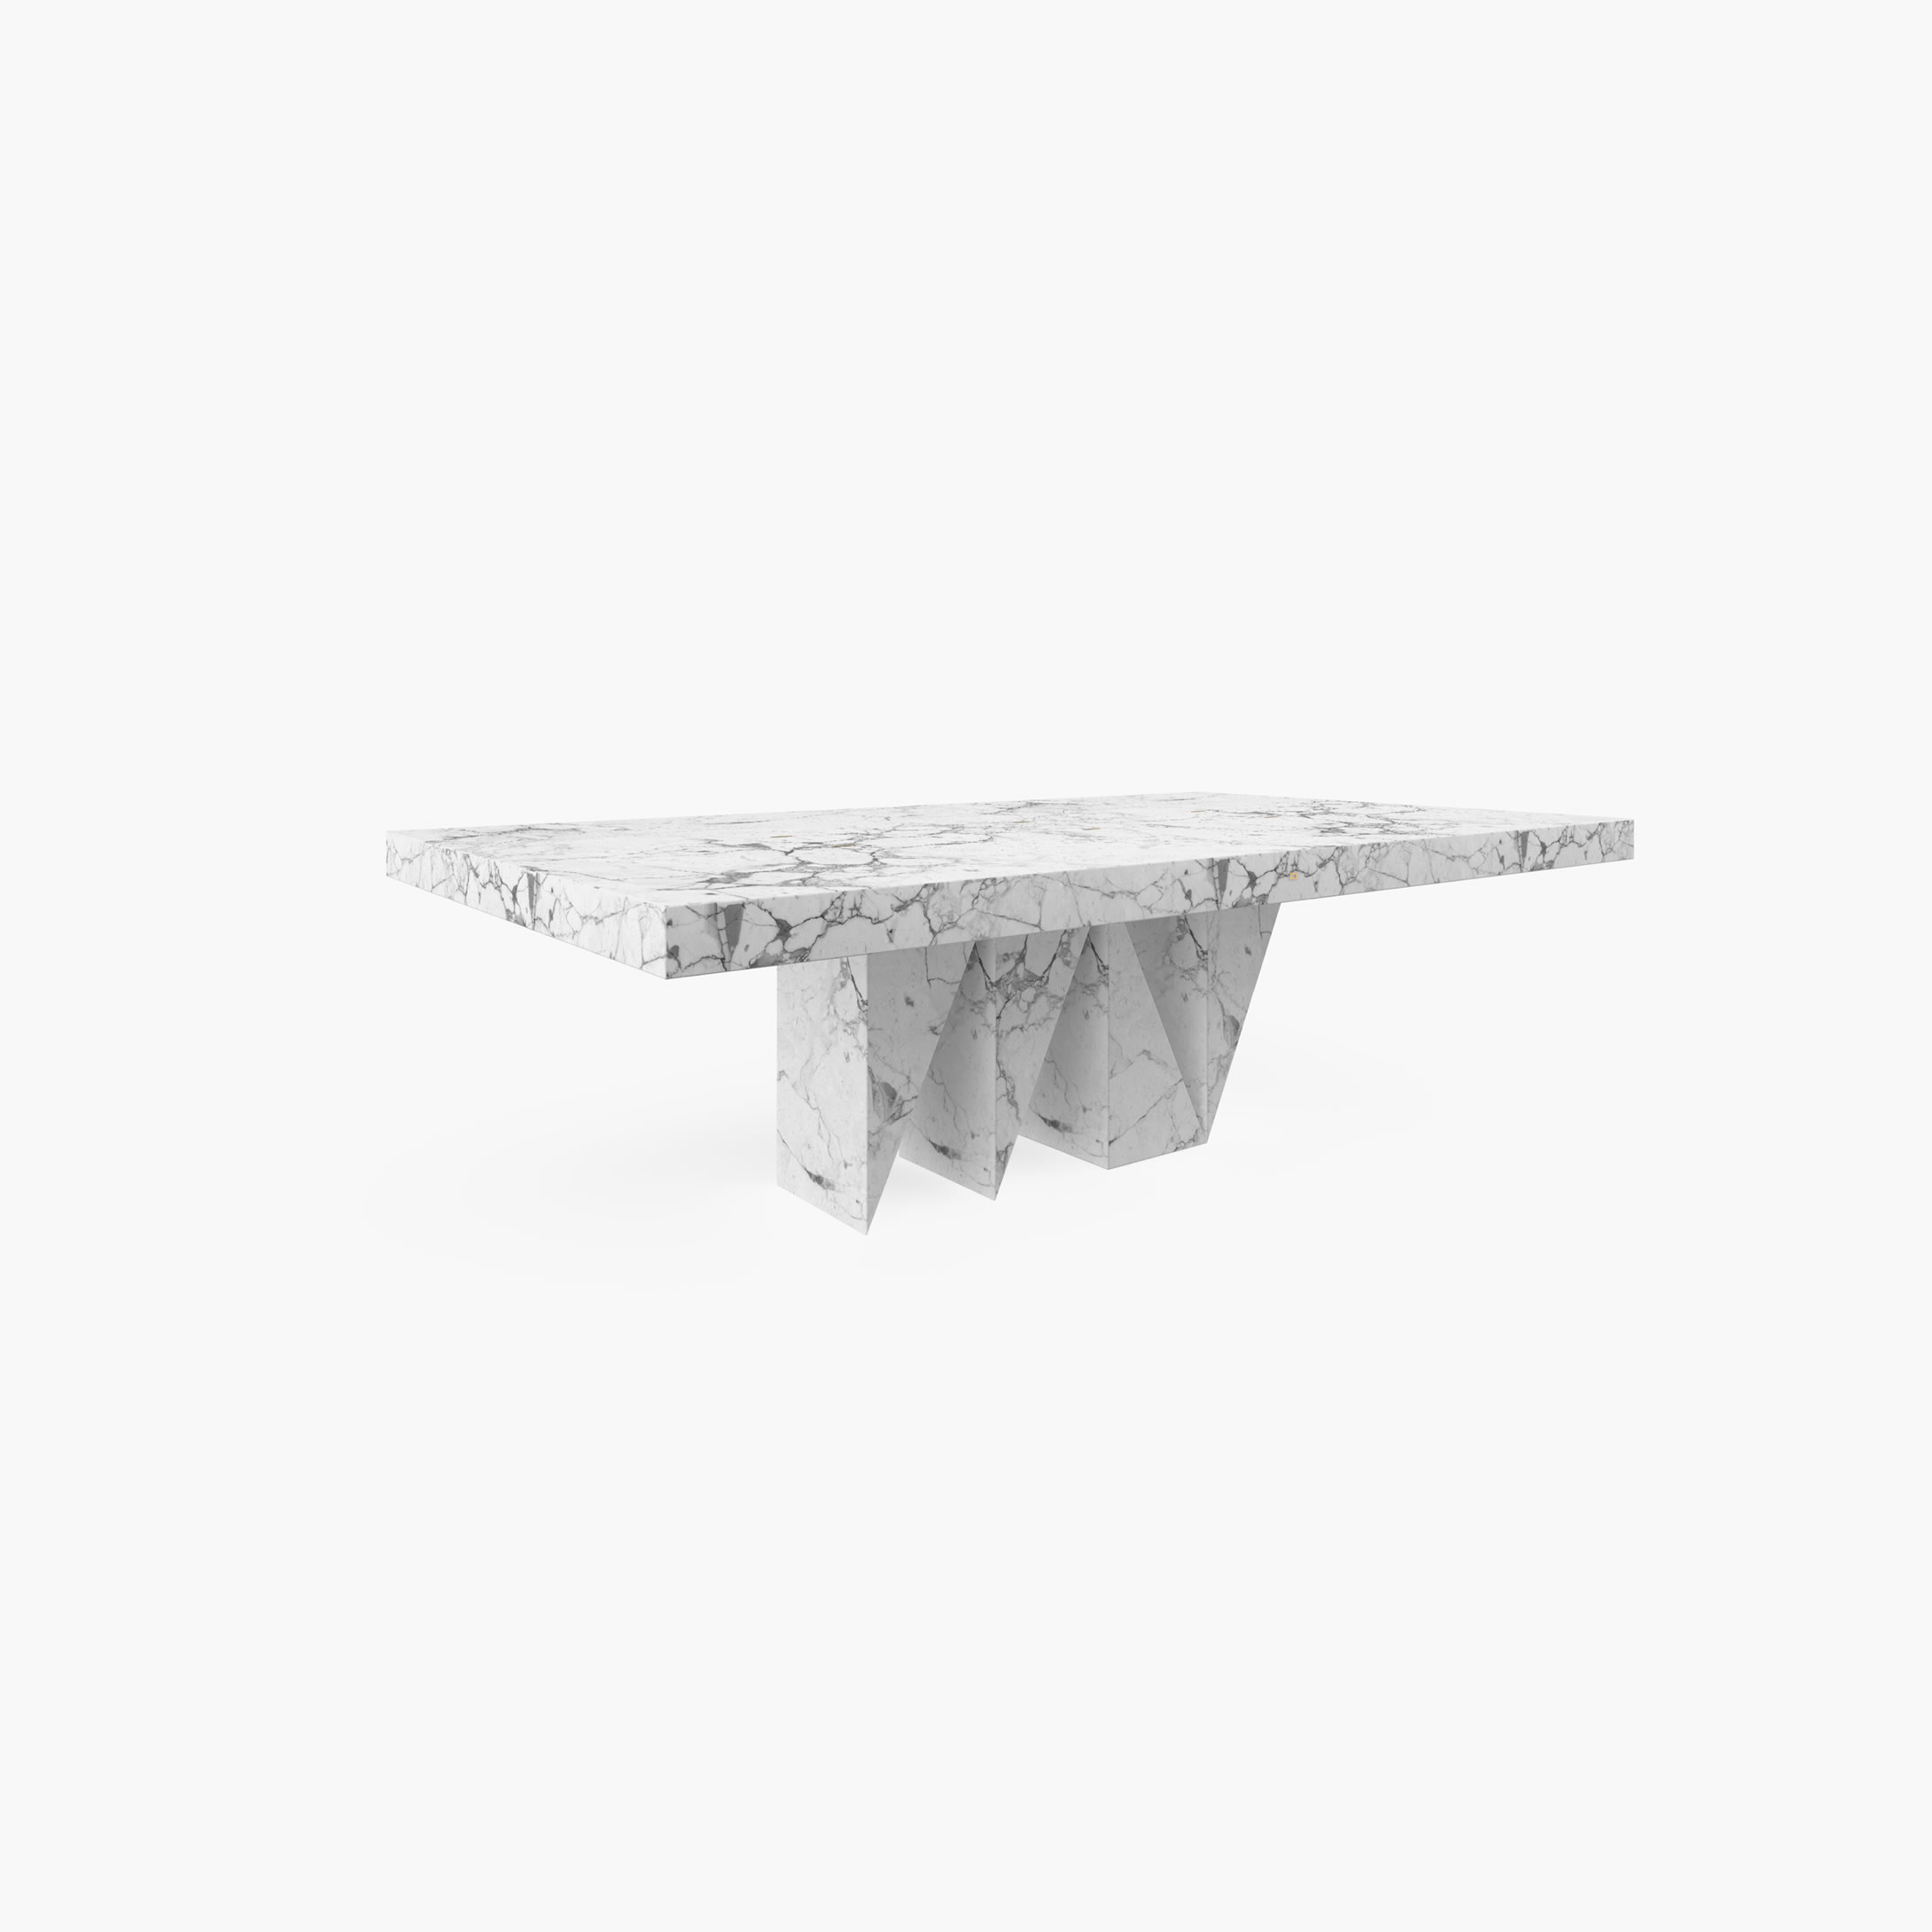 Dining Table Prism Legs White Arabescato Marble modern Dining Room designer Dining Tables FS 174 b FELIX SCHWAKE